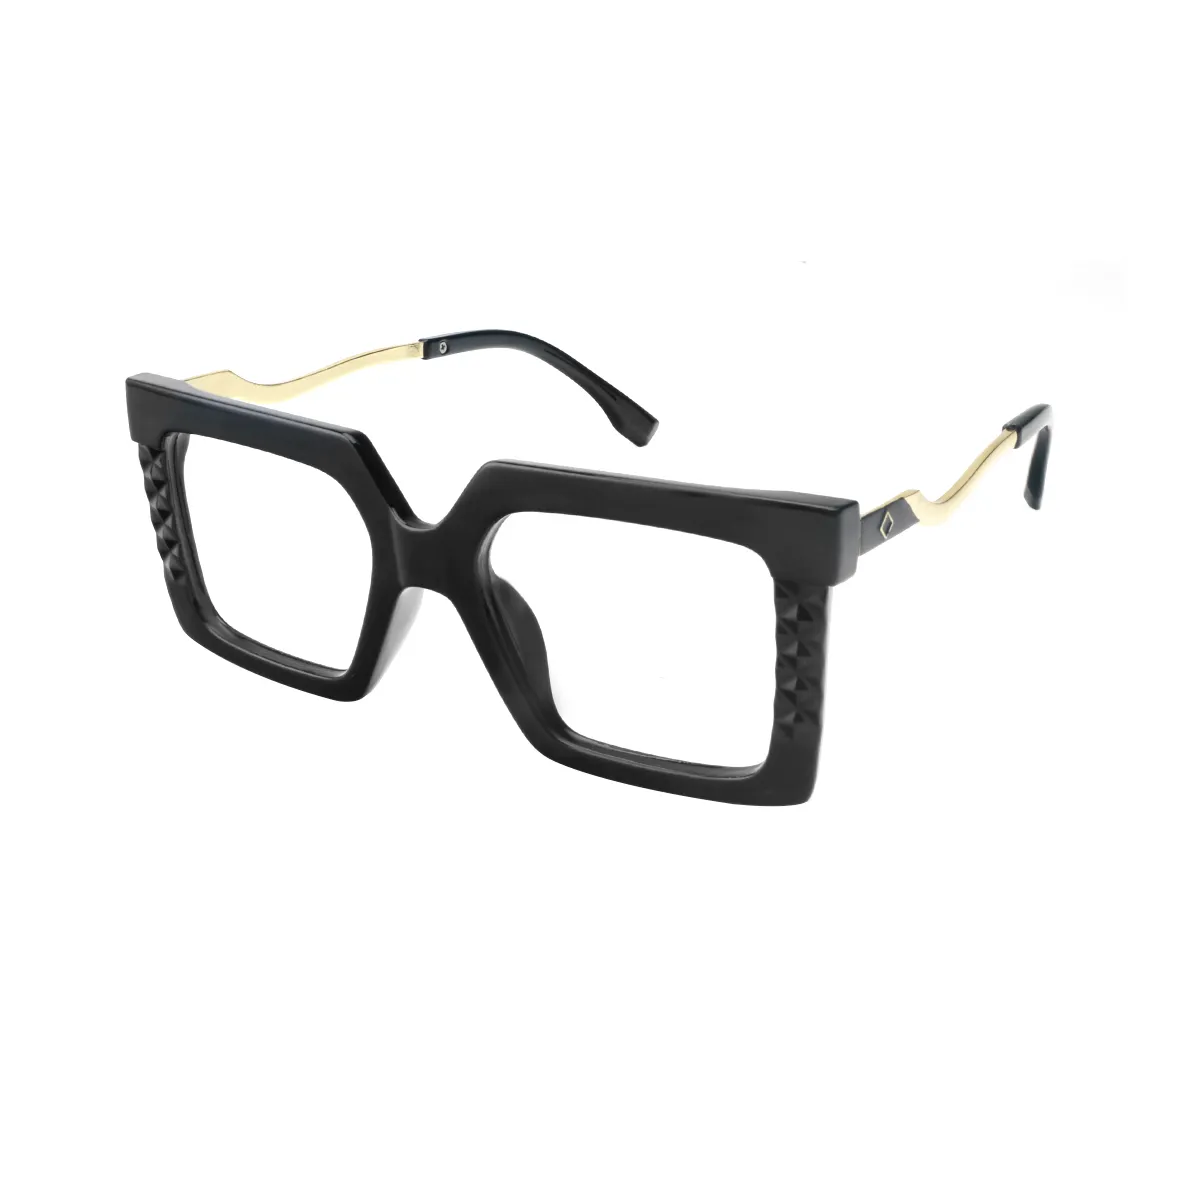 Hilda - Square Black Glasses for Women - EFE